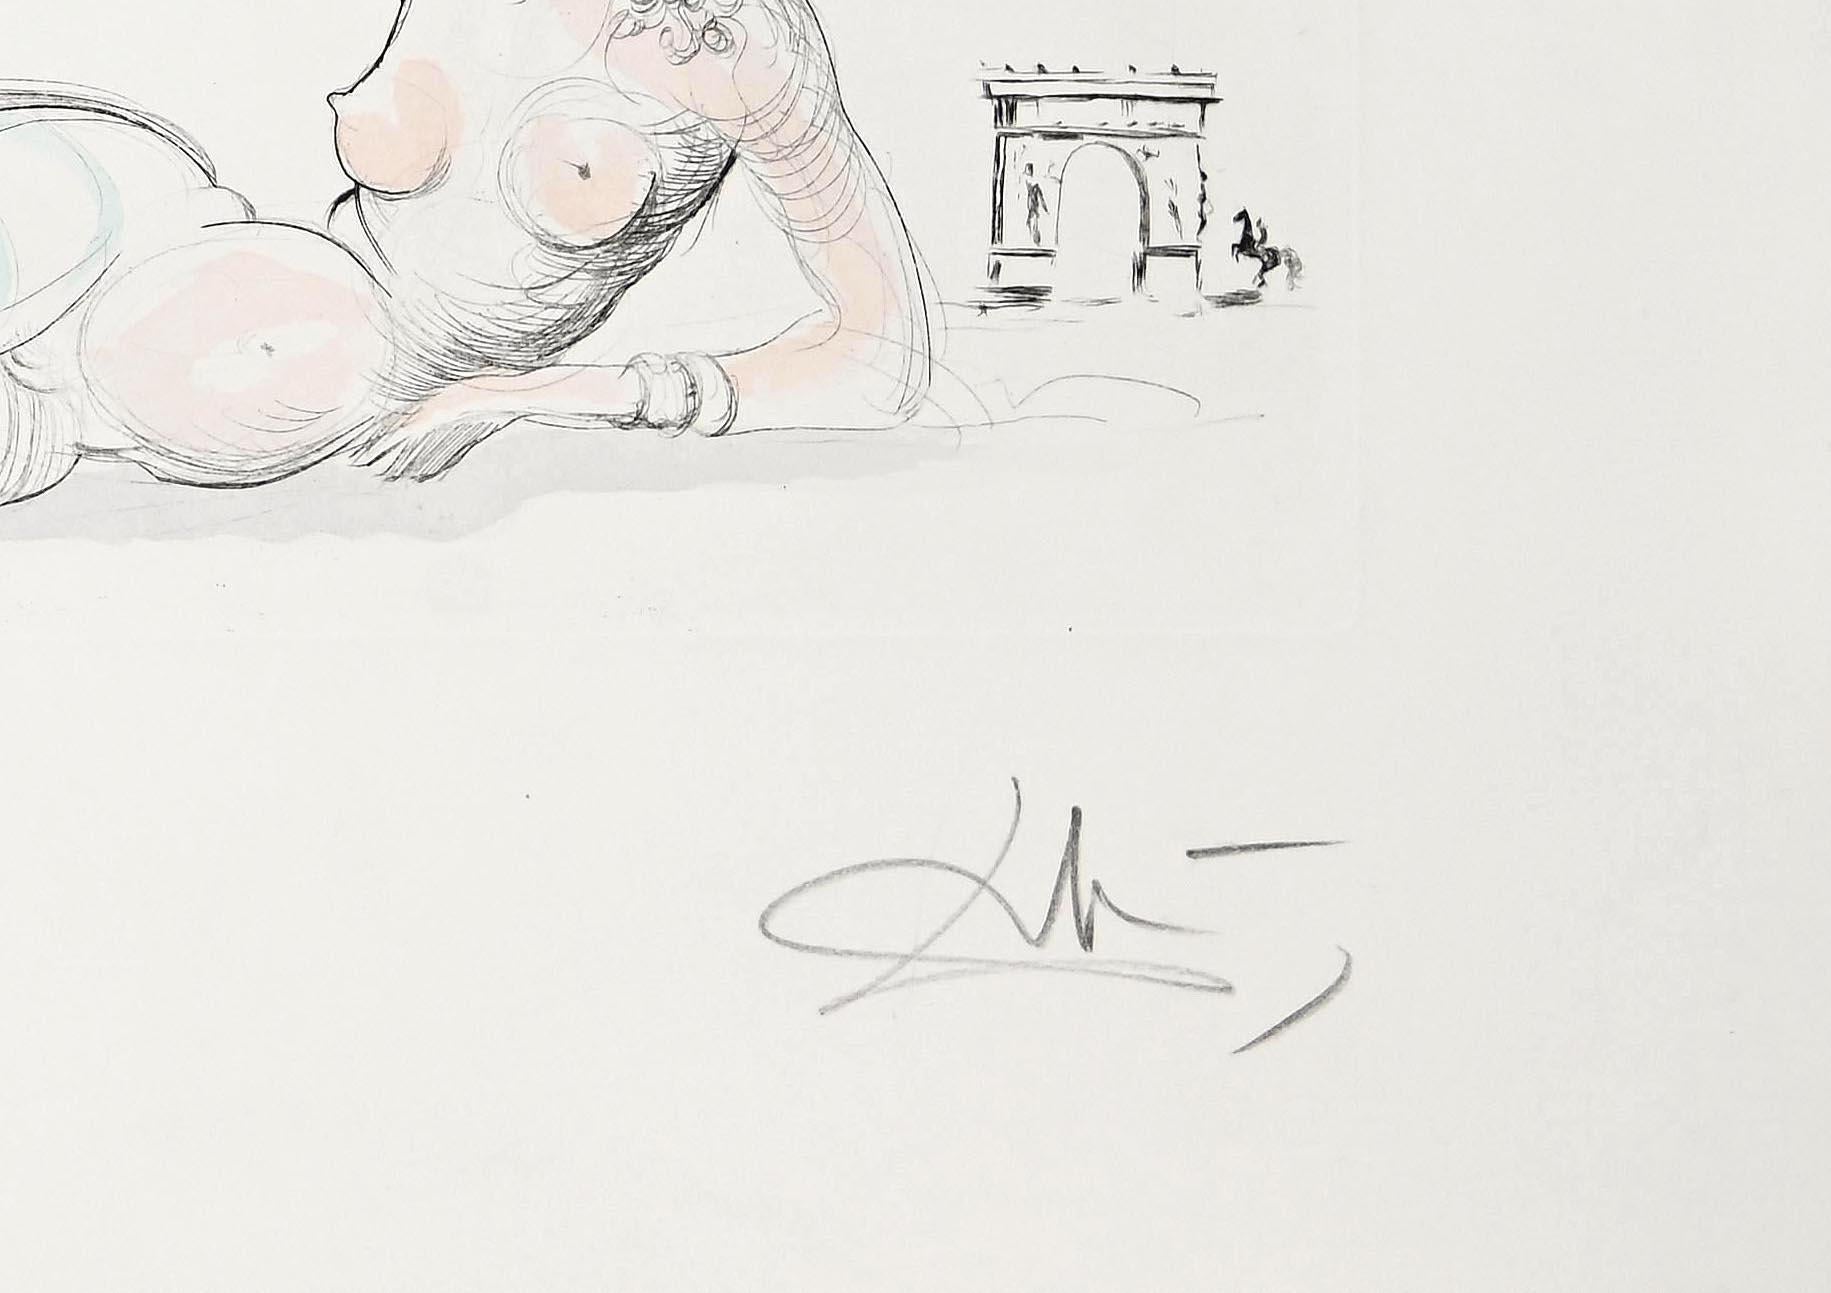 Henry IV - Etching attr. to Salvador Dalì - Early 1980s - Print by Salvador Dalí